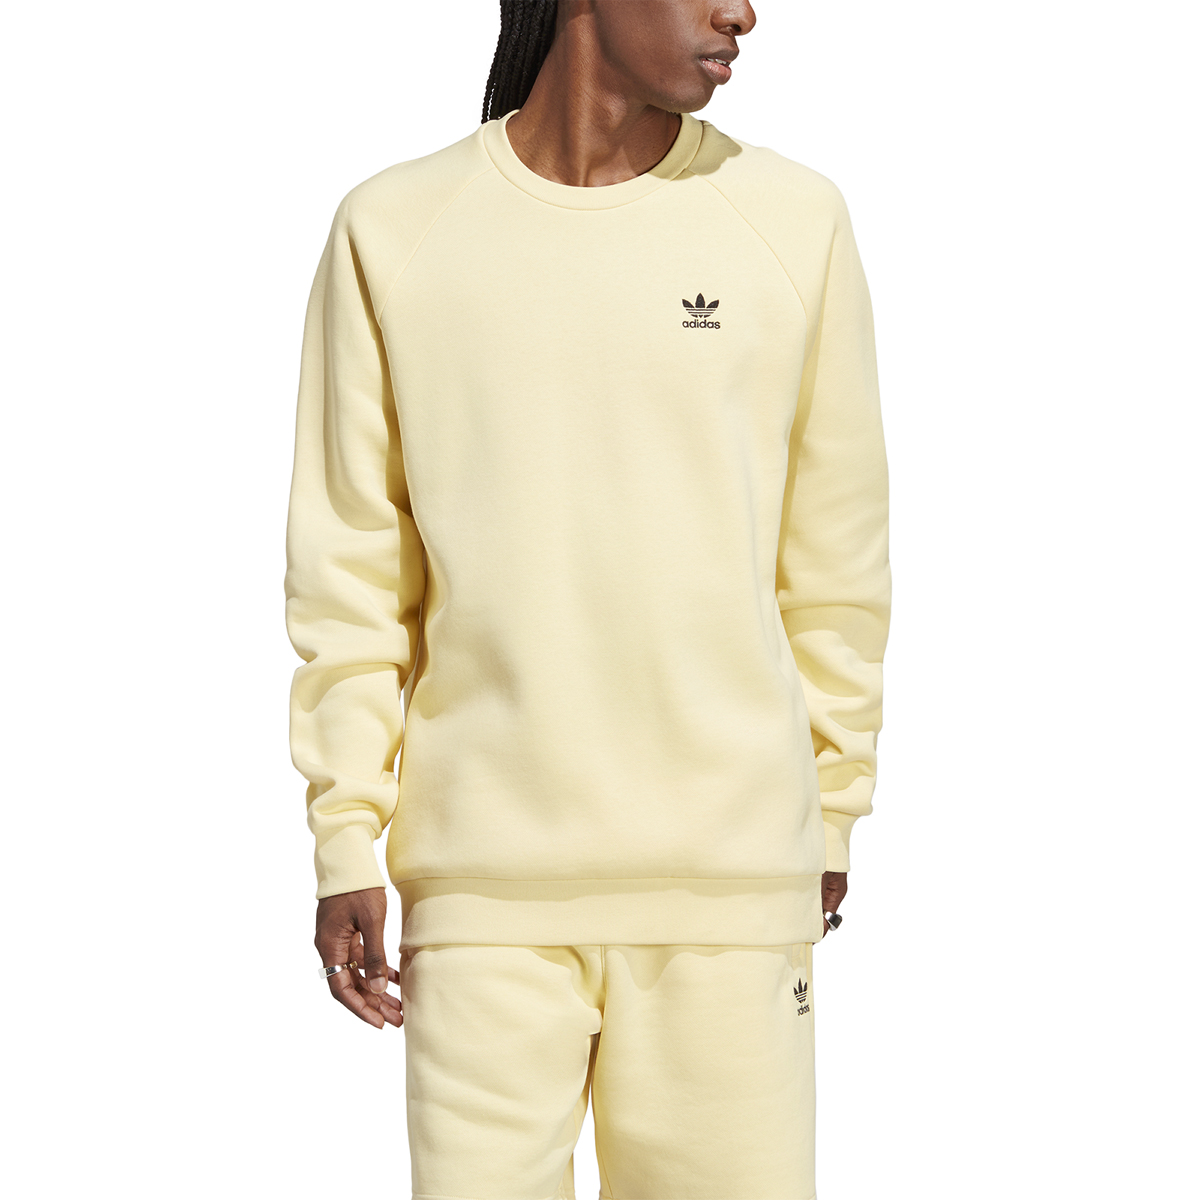 adidas-Originals-Trefoil-Sweatshirt-Yellow